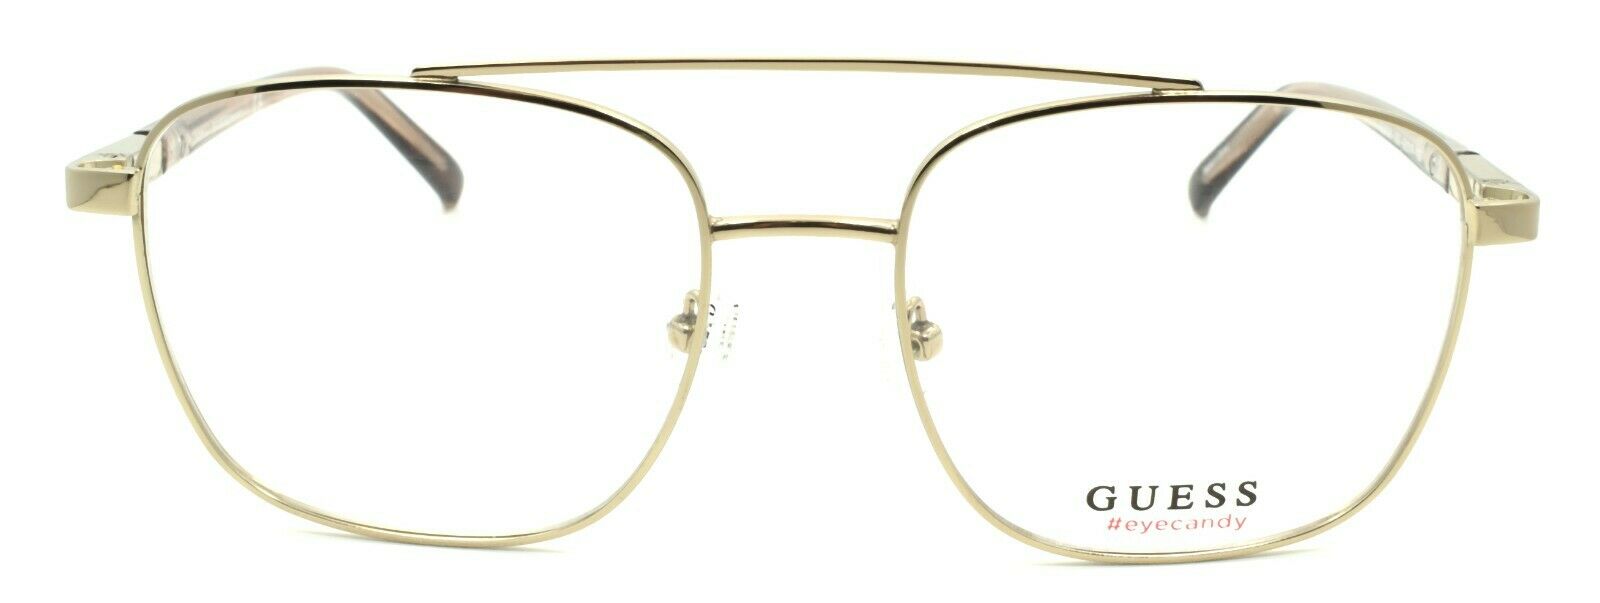 2-GUESS GU3038 032 Eye Candy Eyeglasses Frames Aviator 52-17-135 Pale Gold-889214013125-IKSpecs